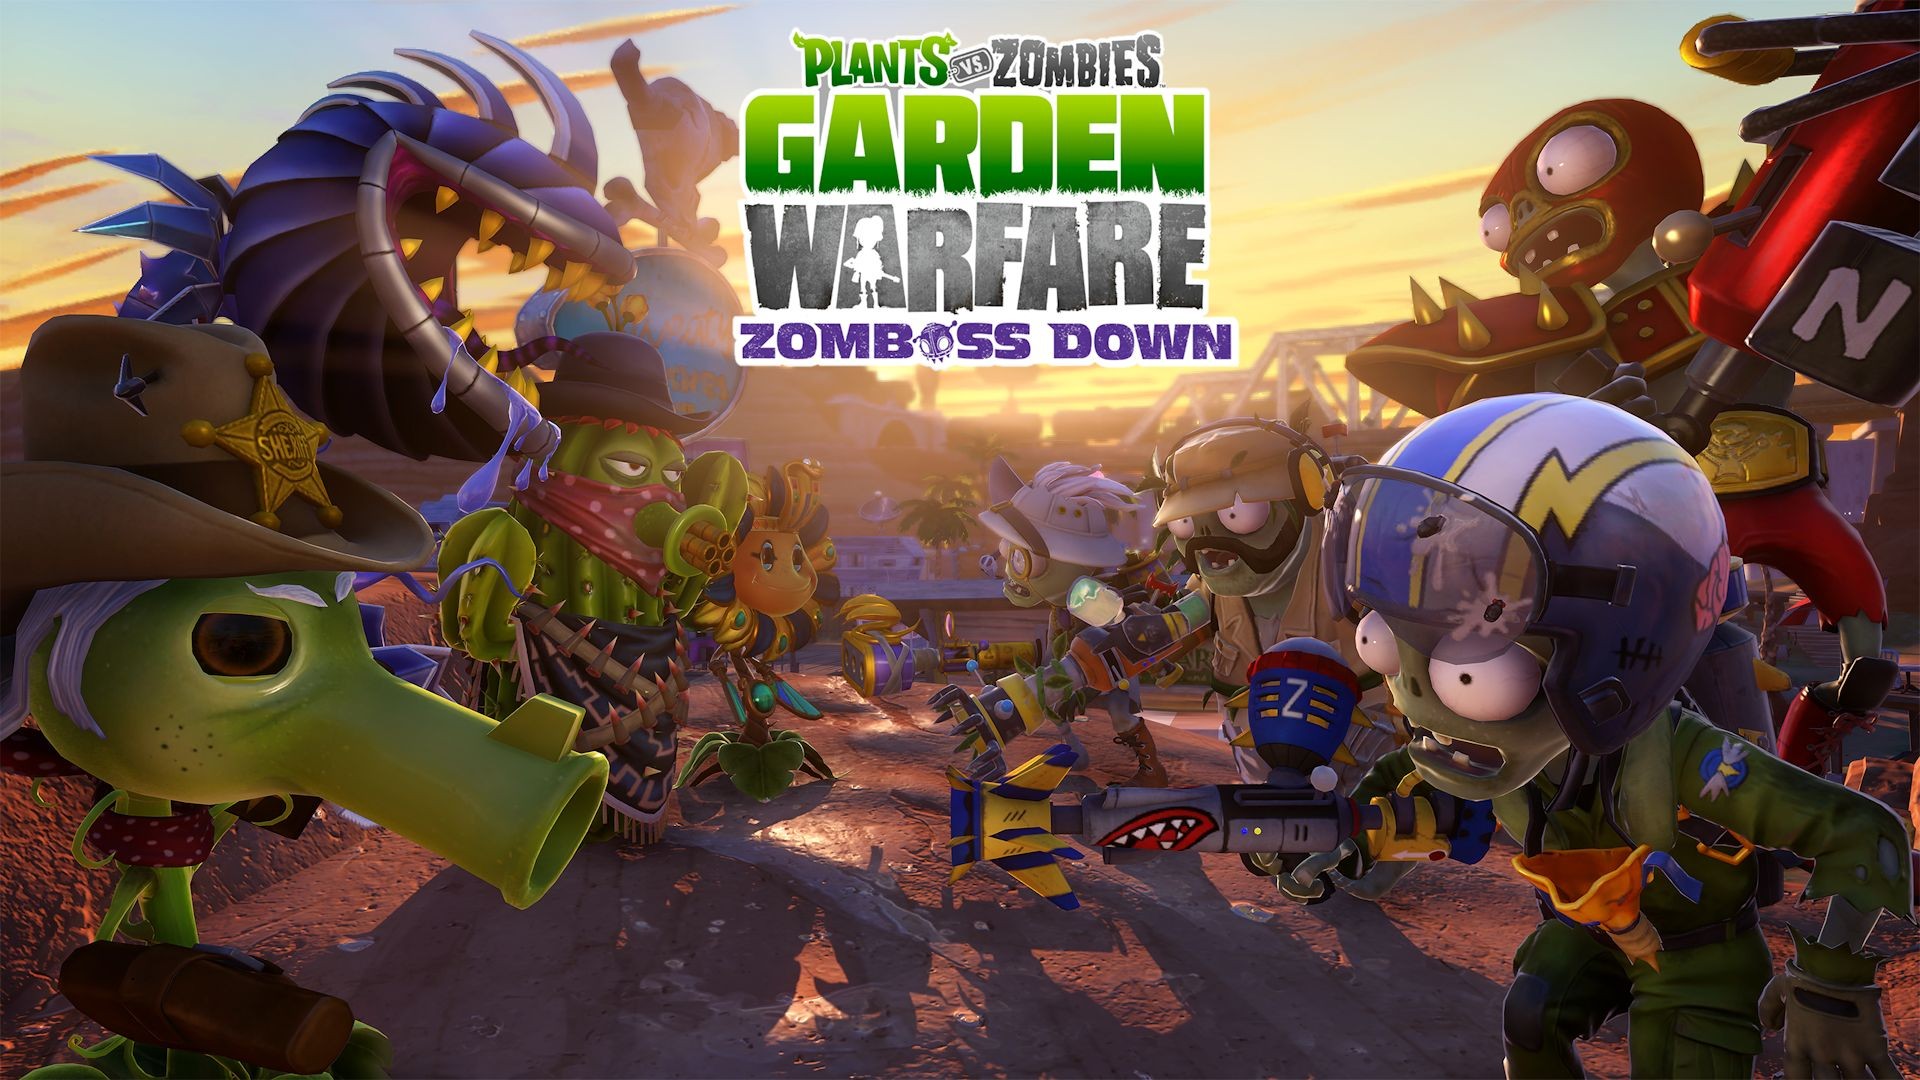 Co-Optimus - Review - Plants vs Zombies: Garden Warfare 2 Co-Op Review